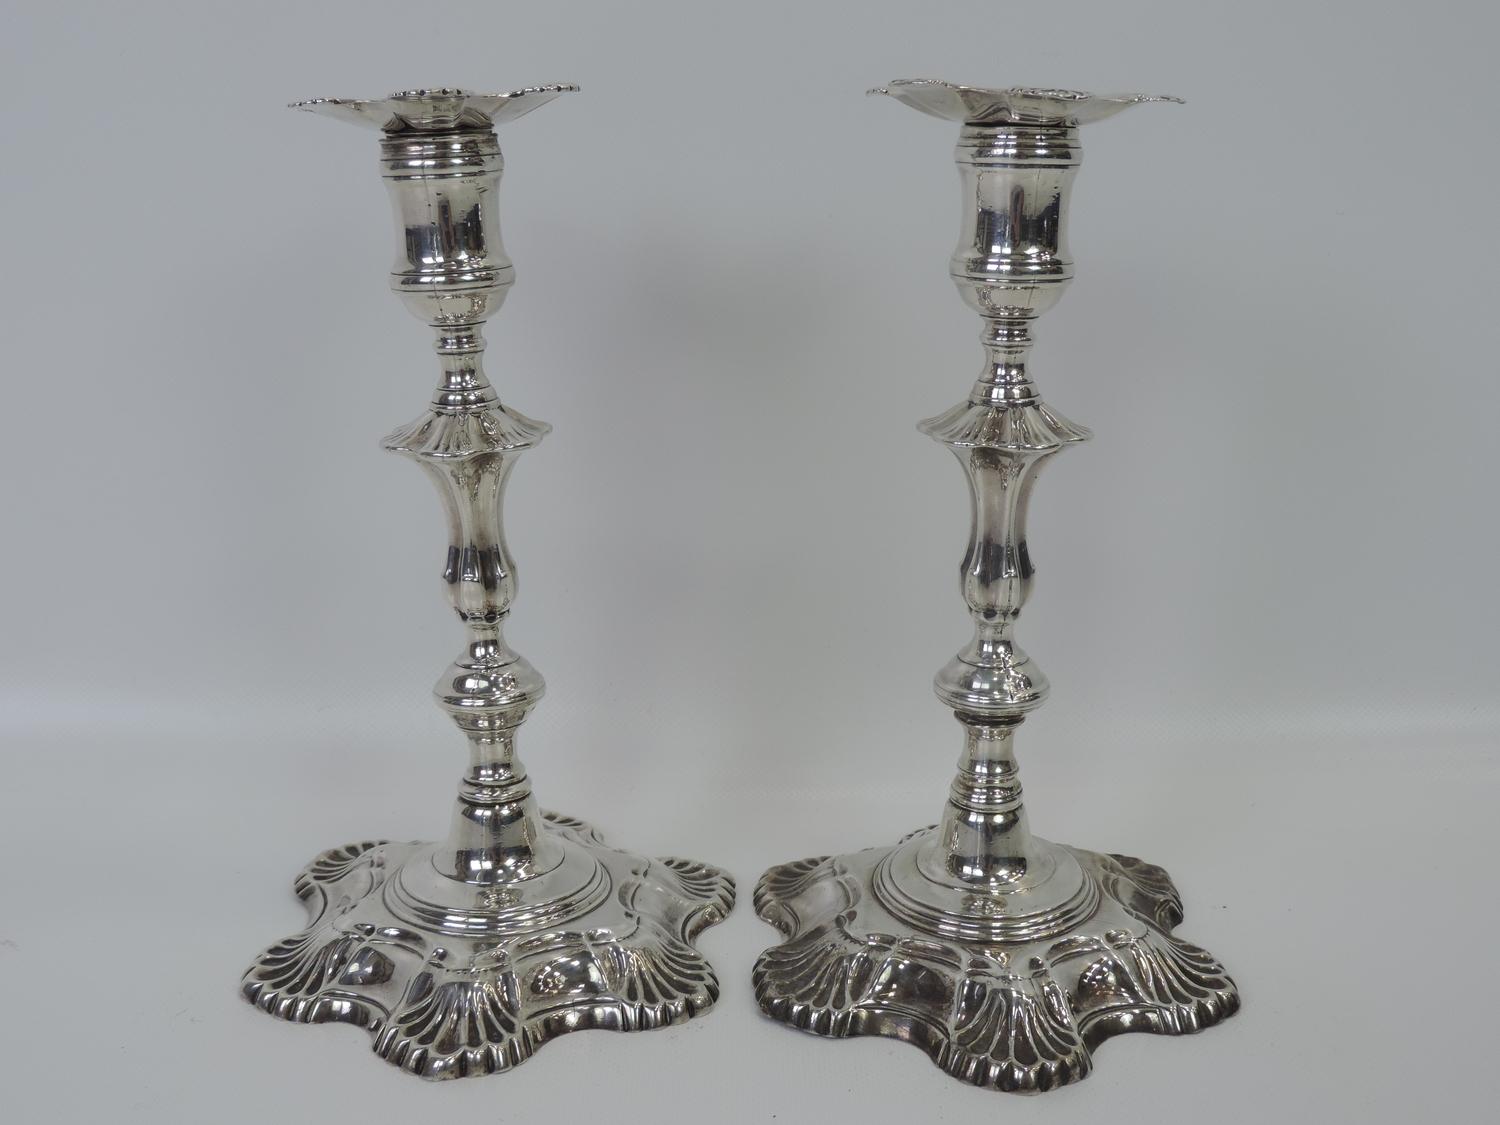 Pair of Good Quality Georgian Silver Candlesticks - John Cafe 1751 - 950 grams - 8.5" High